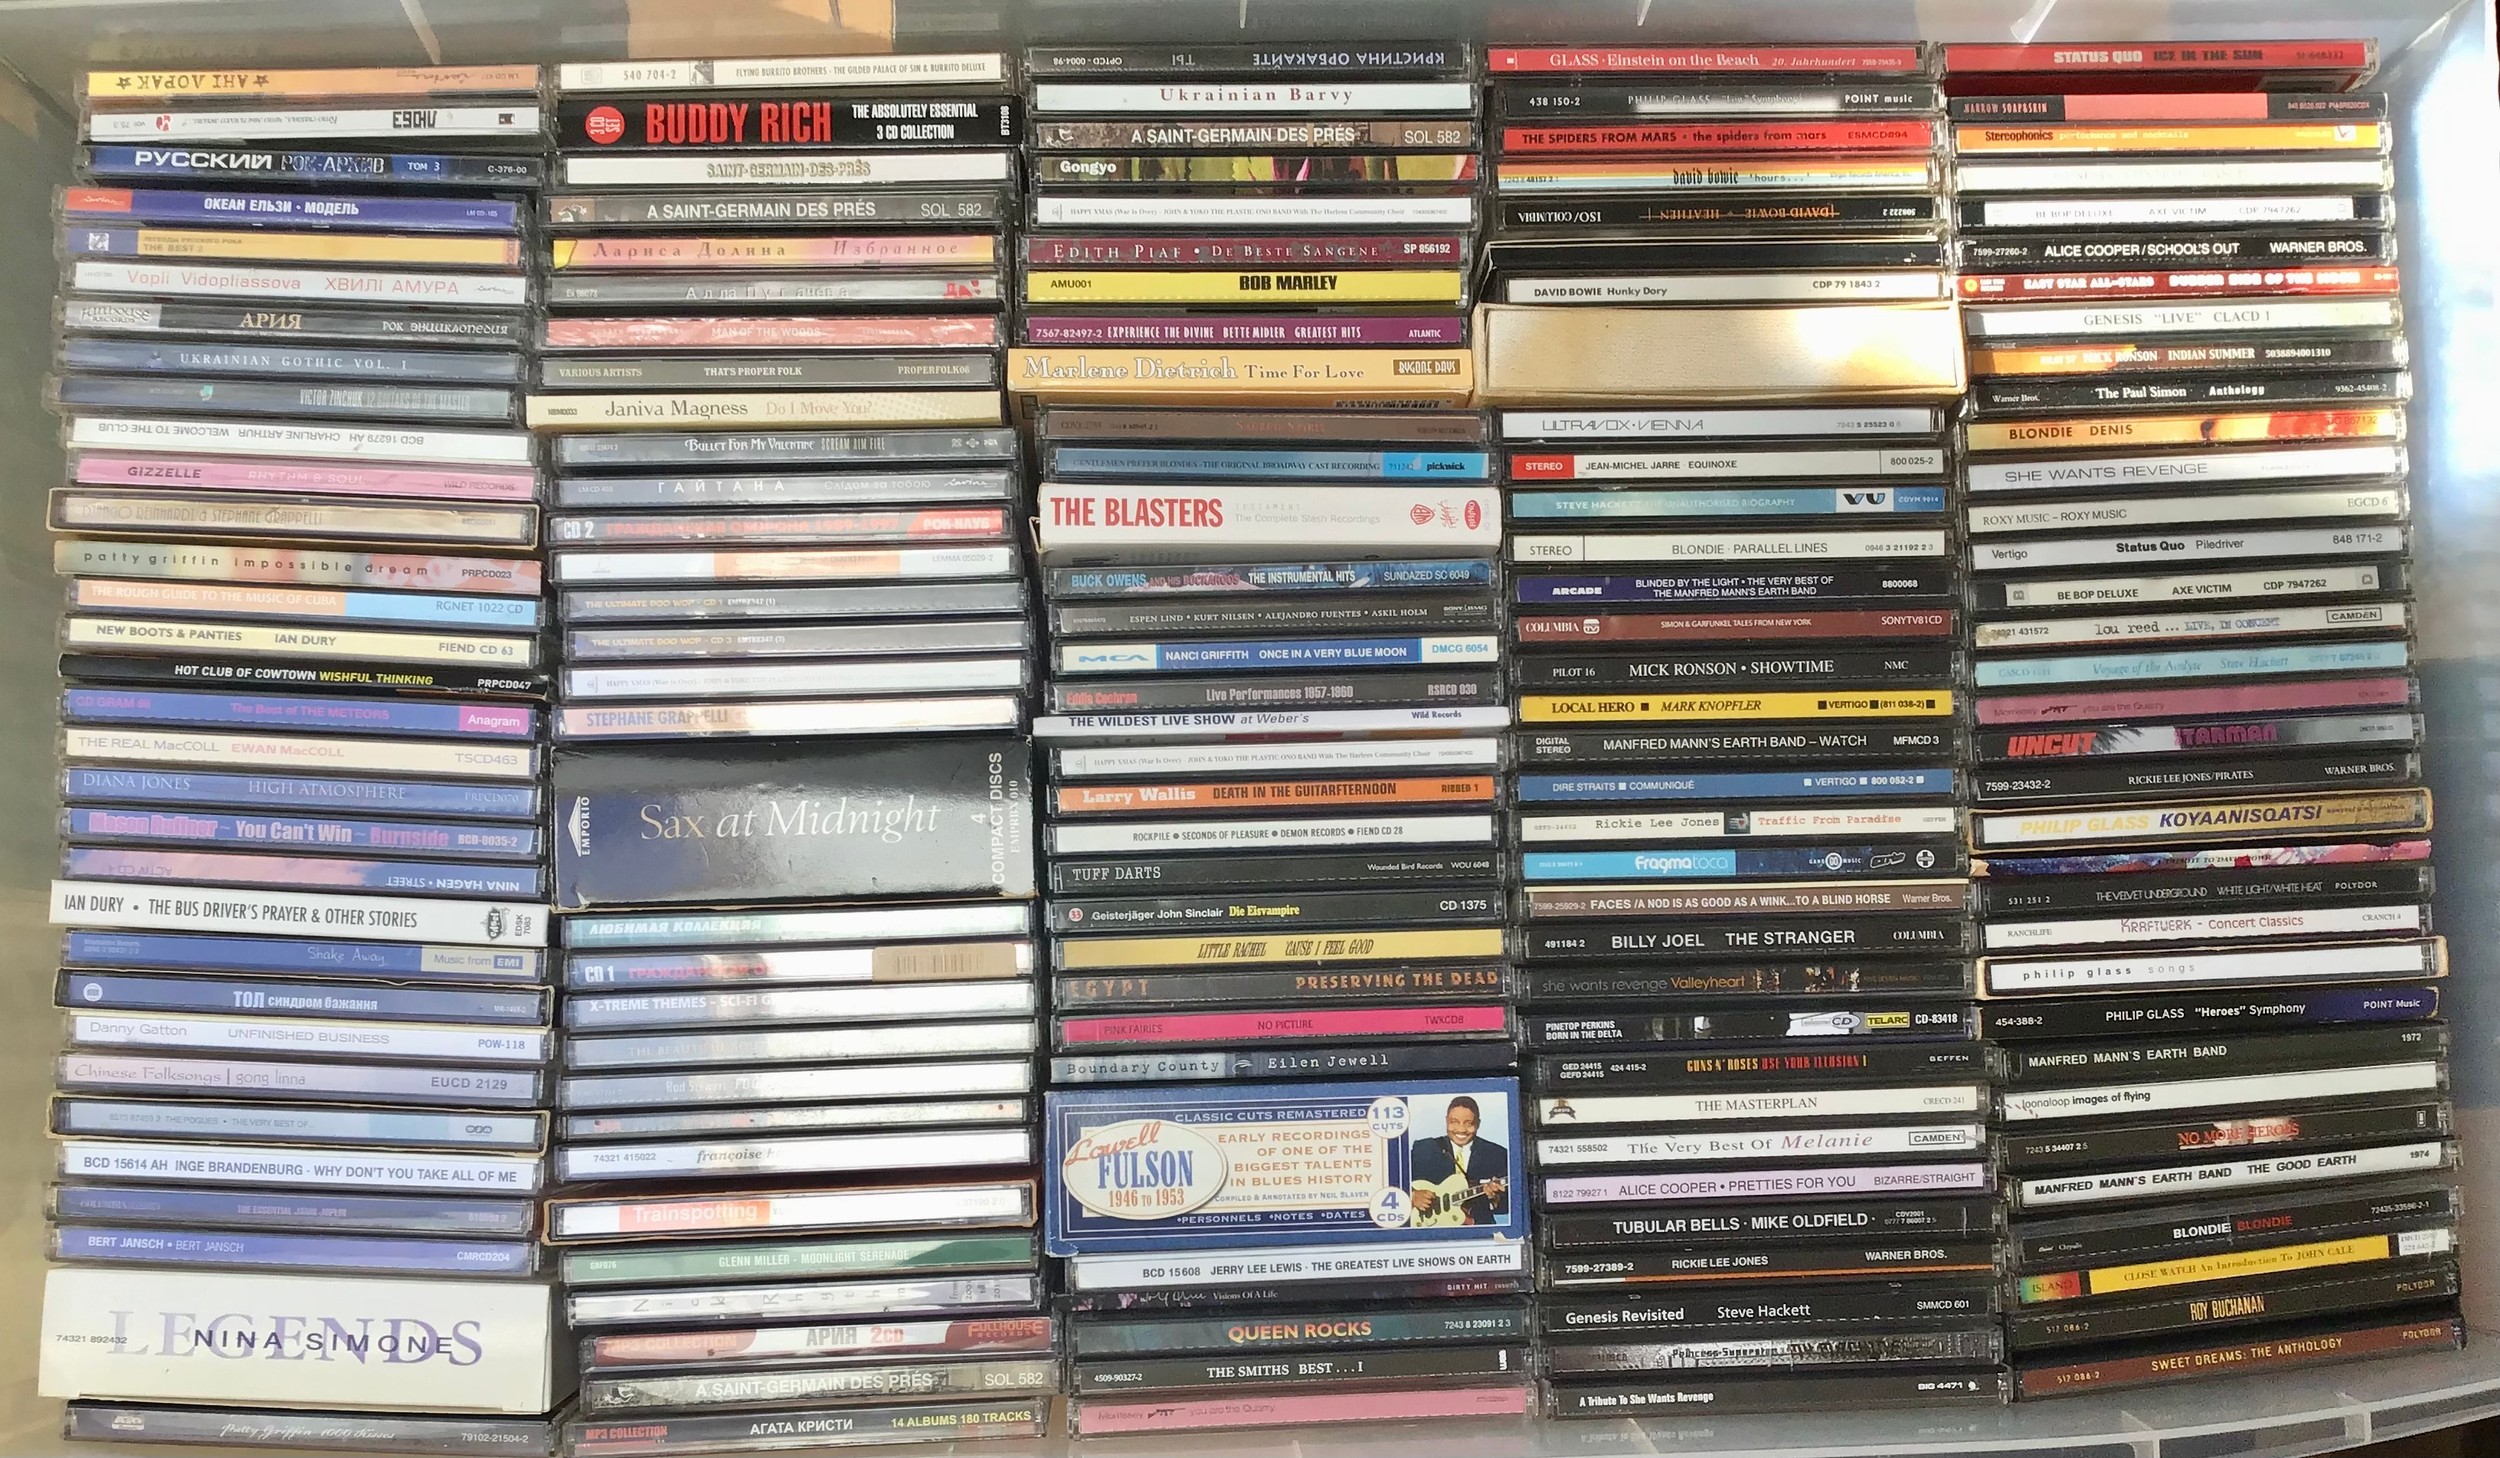 BOX OF VARIOUS ROCK / POP COMPACT DISCS. To include artists - Alice Cooper - Larry Wallis - Nina